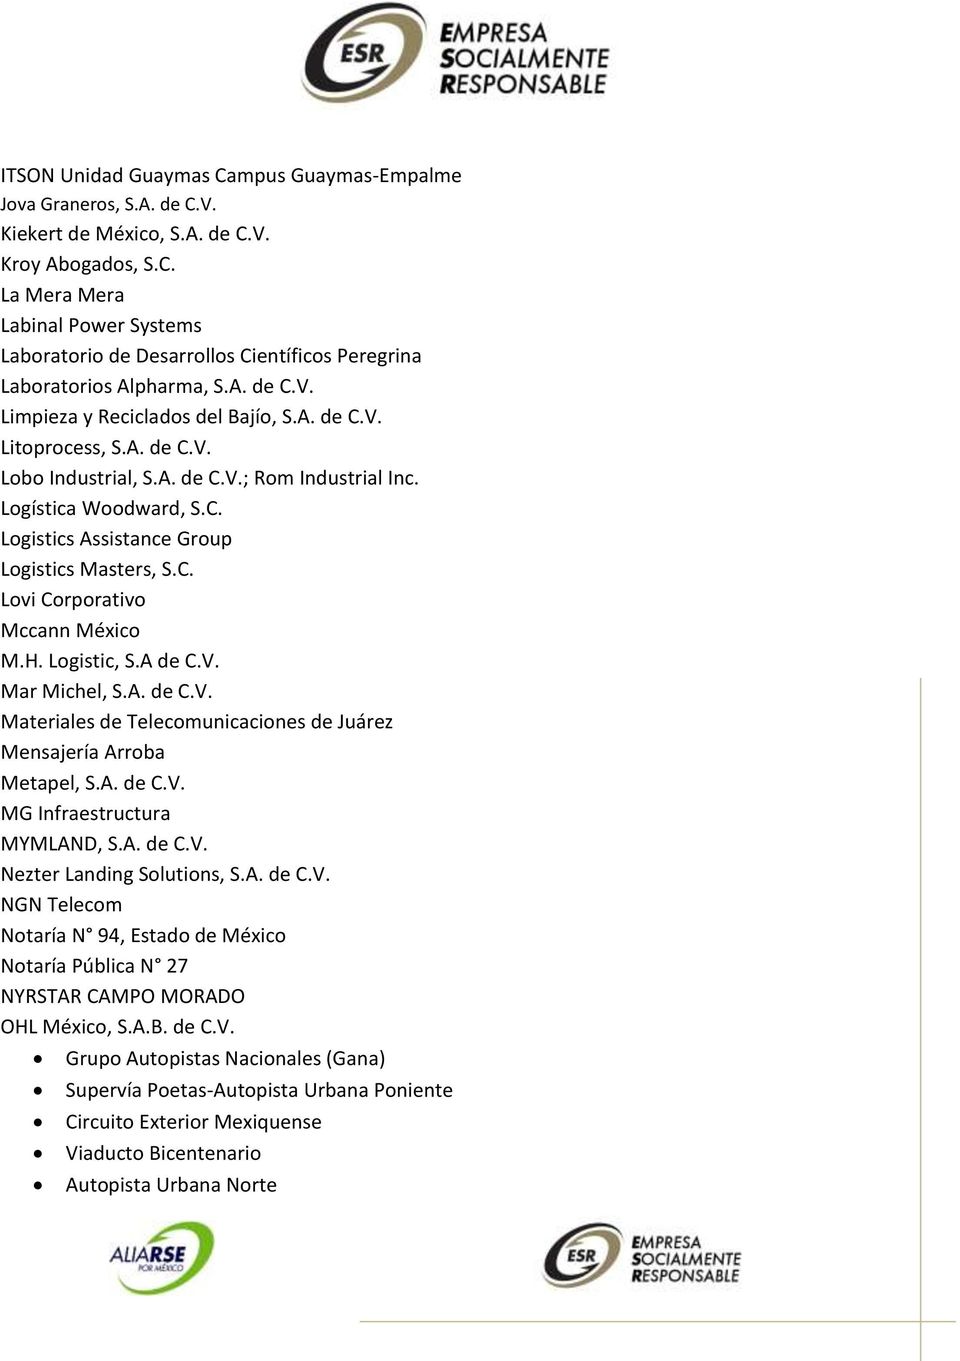 C. Lovi Corporativo Mccann México M.H. Logistic, S.A de C.V. Mar Michel, S.A. de C.V. Materiales de Telecomunicaciones de Juárez Mensajería Arroba Metapel, S.A. de C.V. MG Infraestructura MYMLAND, S.